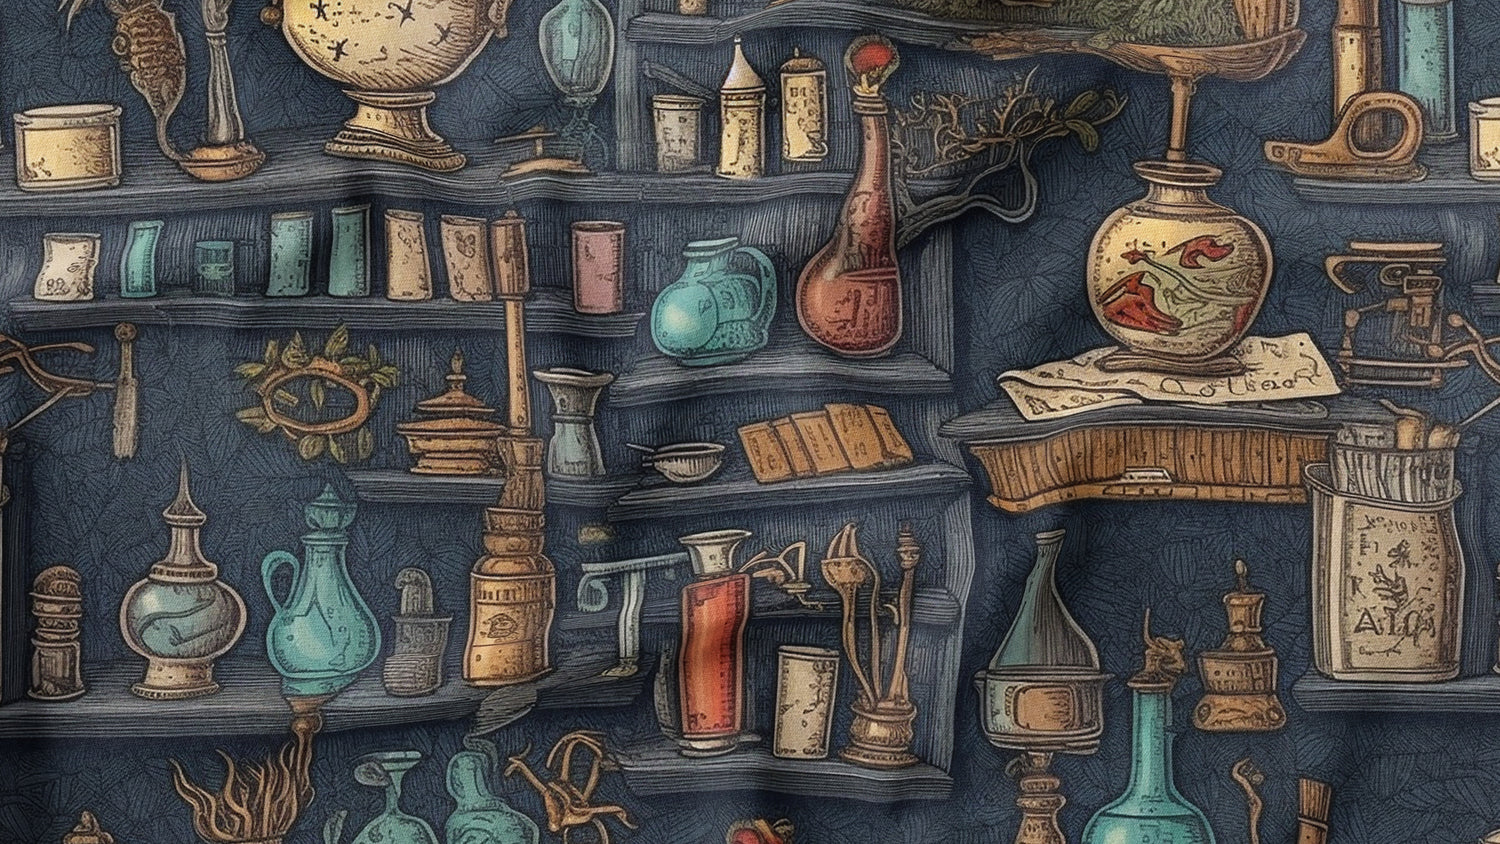 The Alchemist's Cabinet